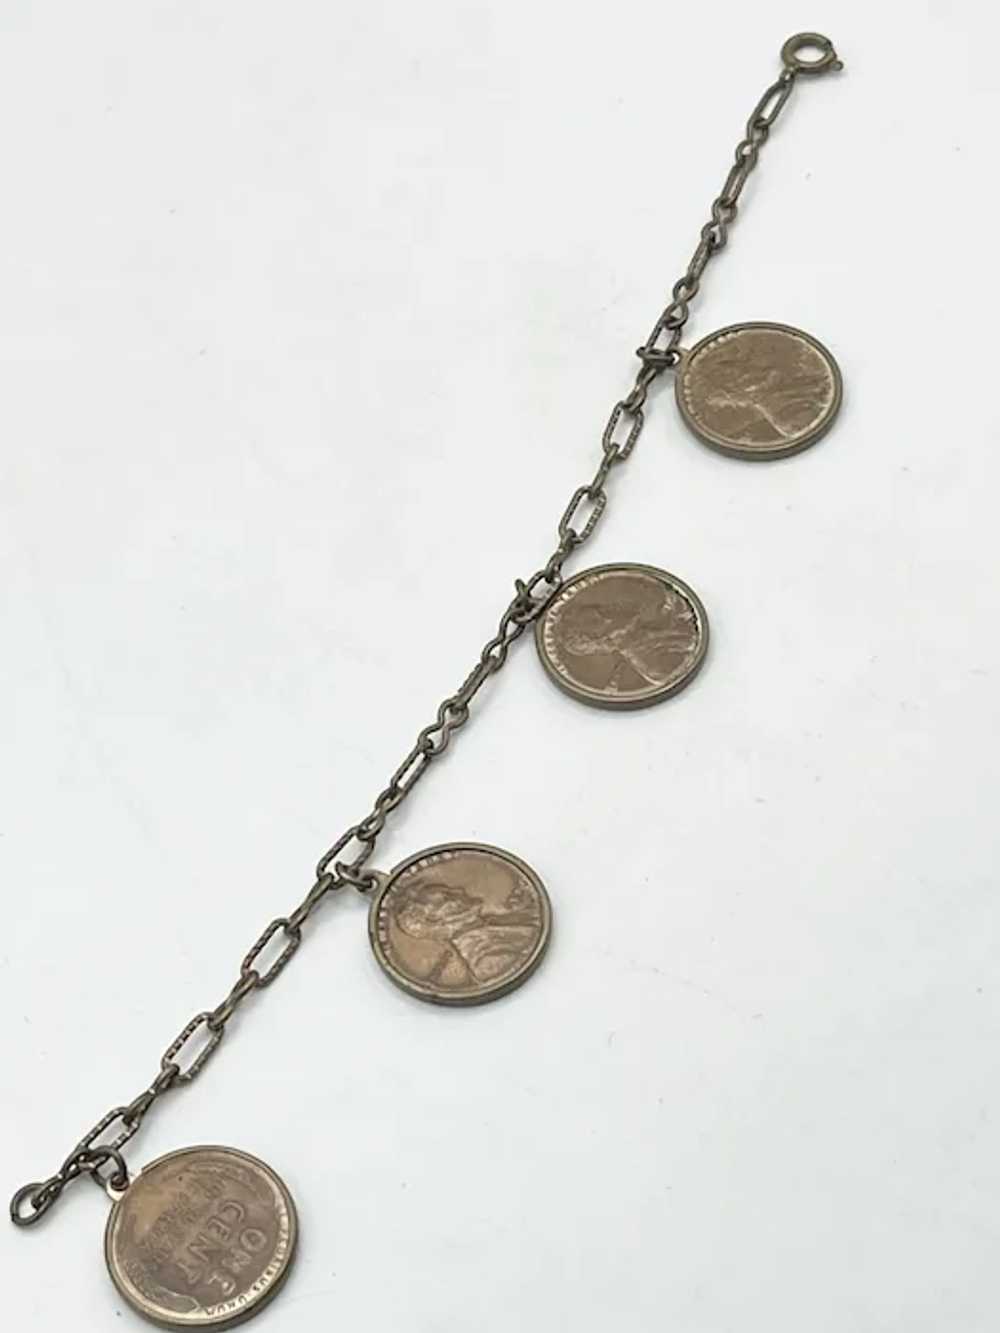 Vintage one cent penny coin charm bracelet - image 2